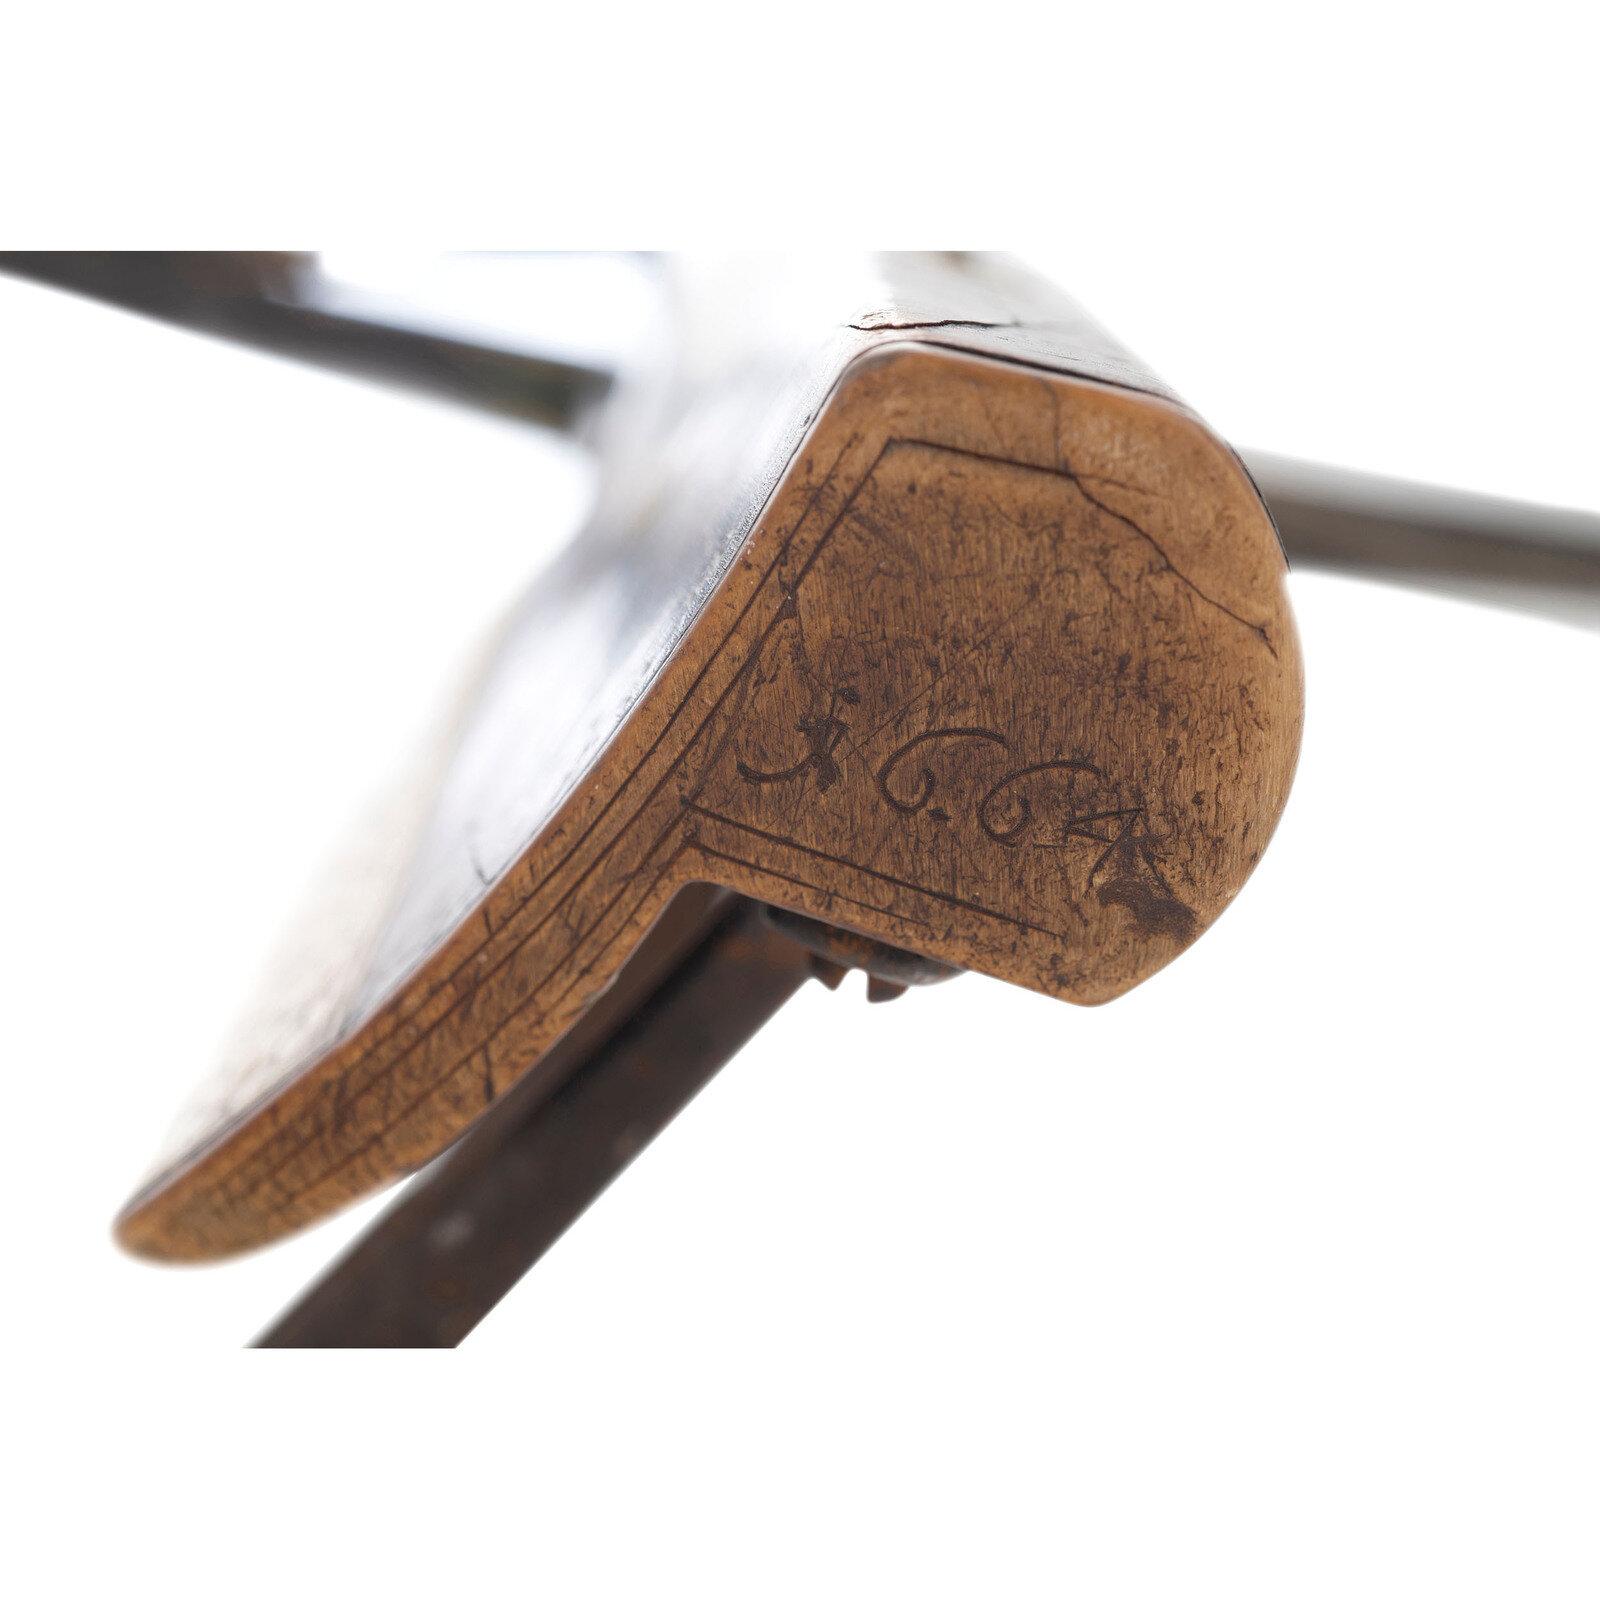 A Mid-17th Century European Crossbow